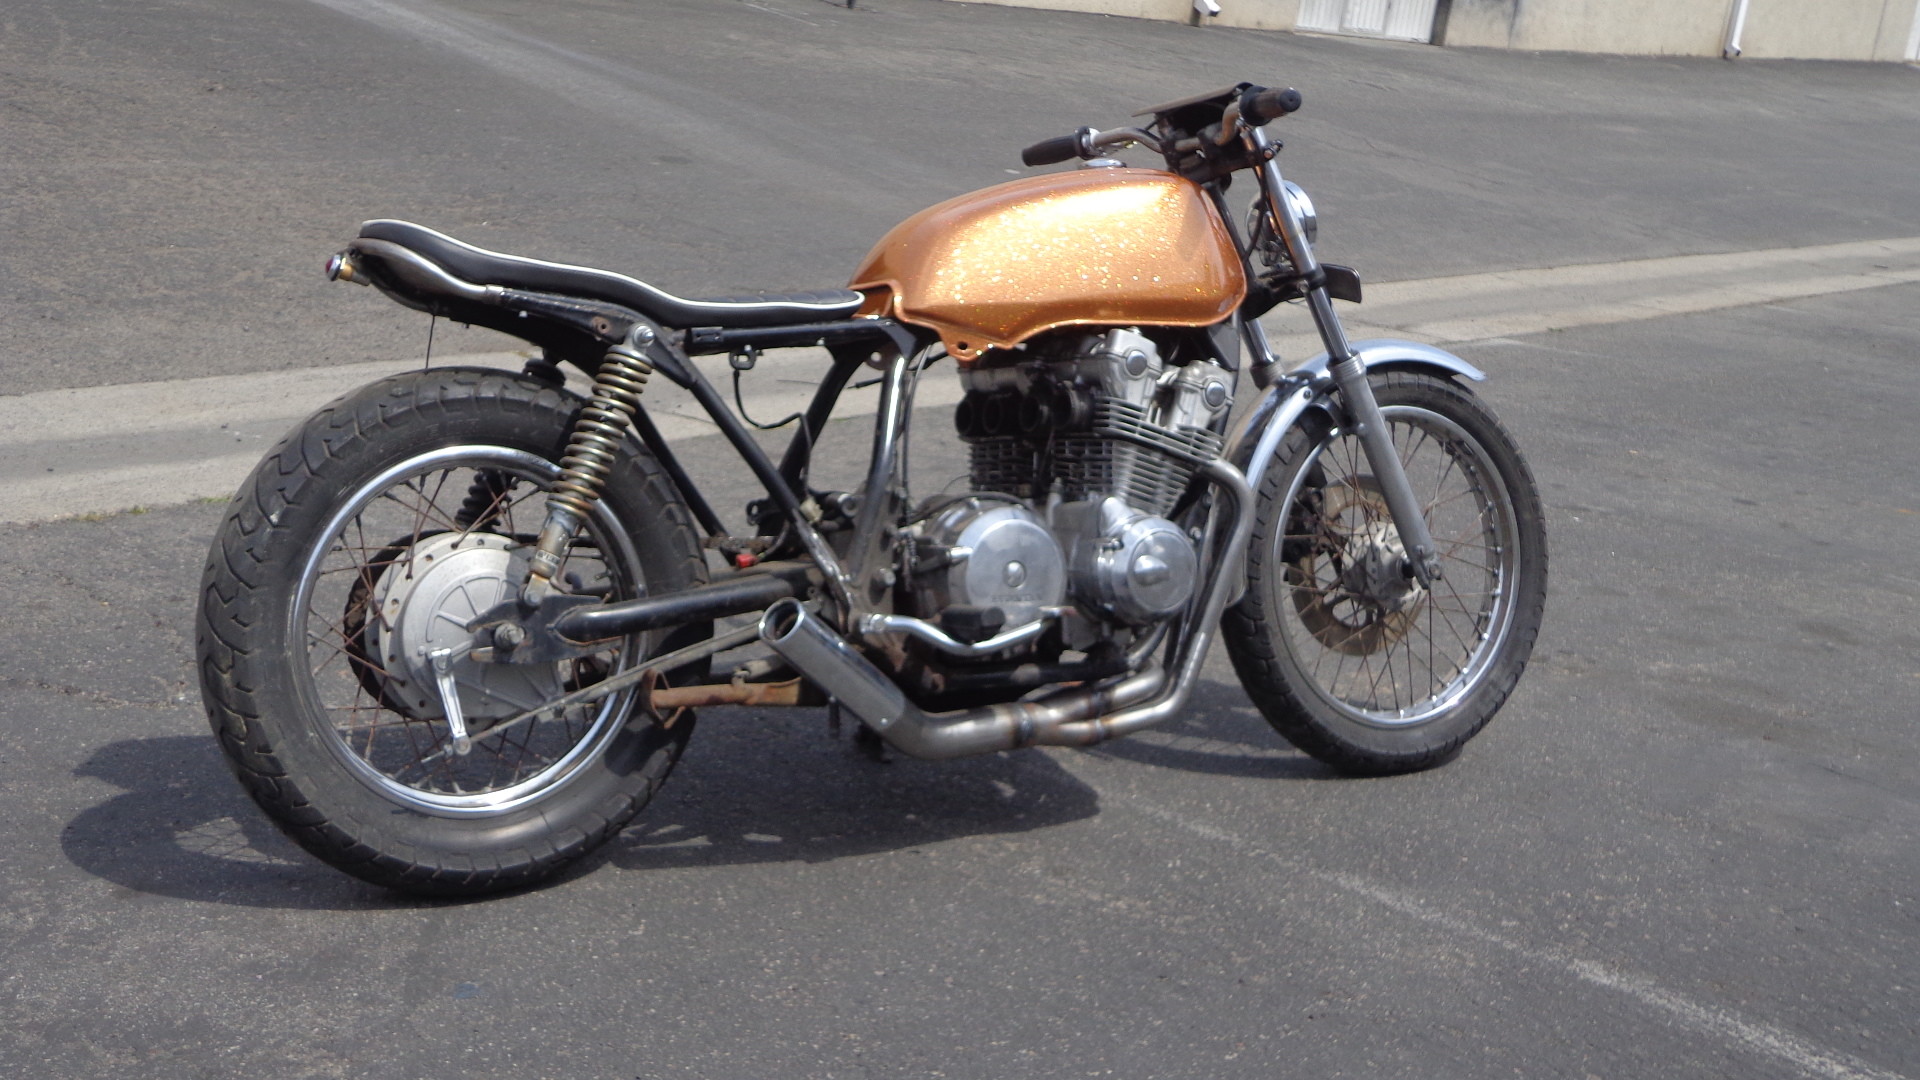 1920x1080 Honda Cb500t Cafe Racer Wallpaper 4 Jpg 1920 1080 Motorcycles